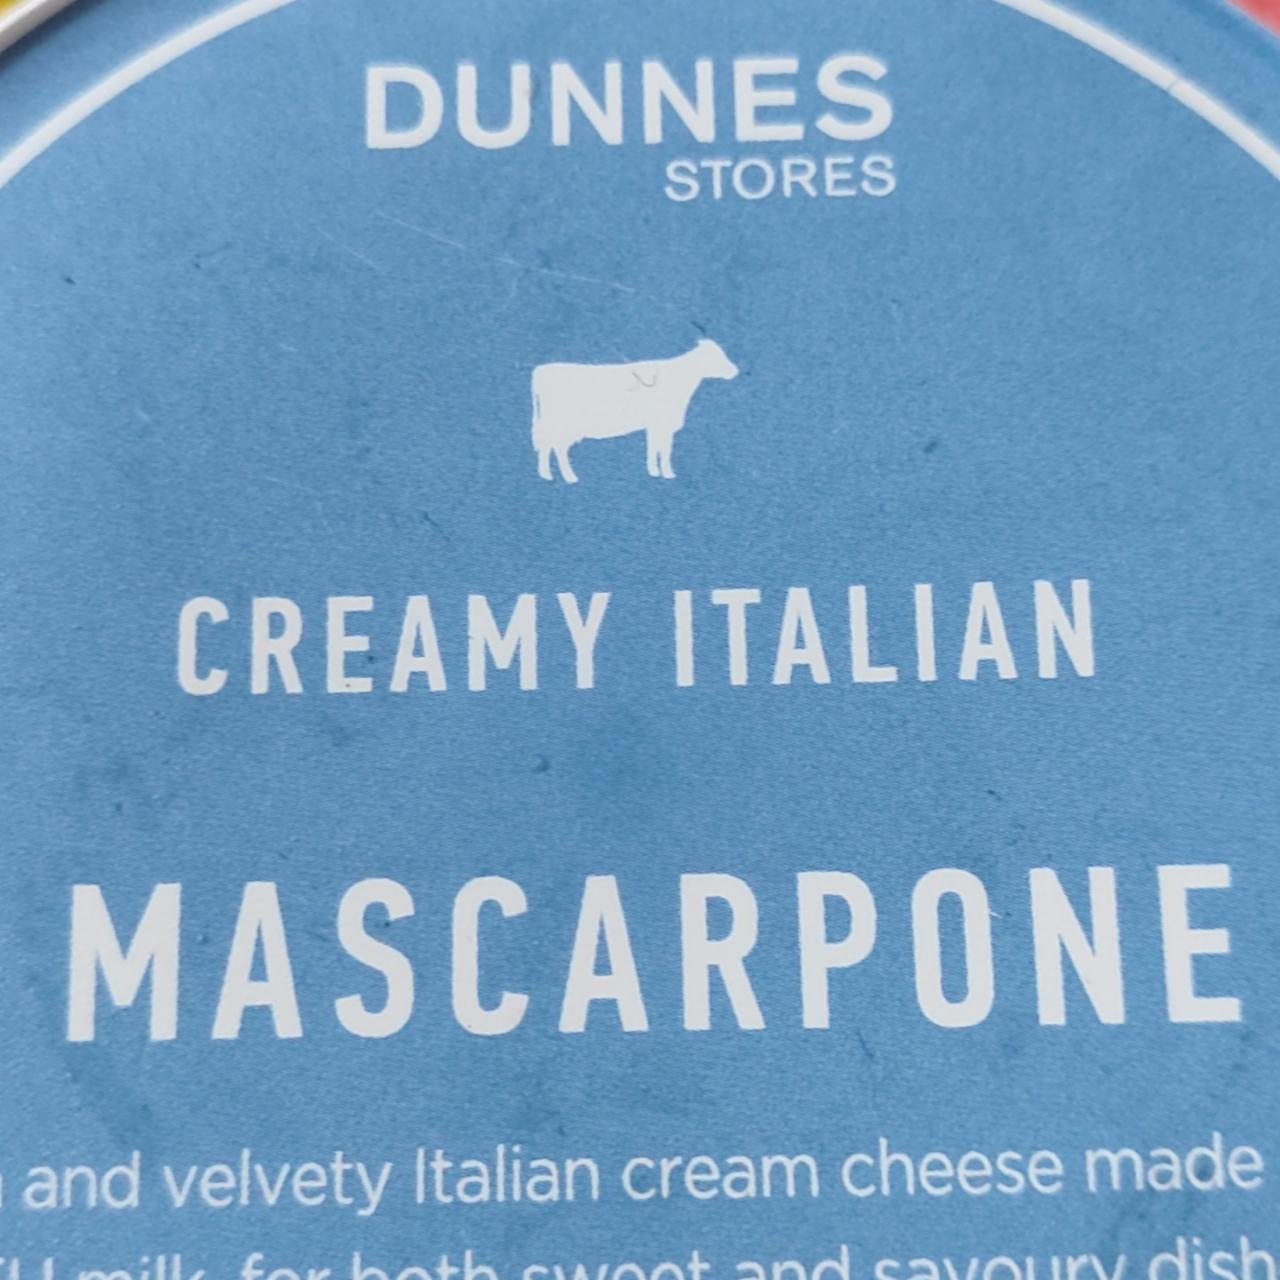 Fotografie - Creamy Italian mascarpone dunnes stores